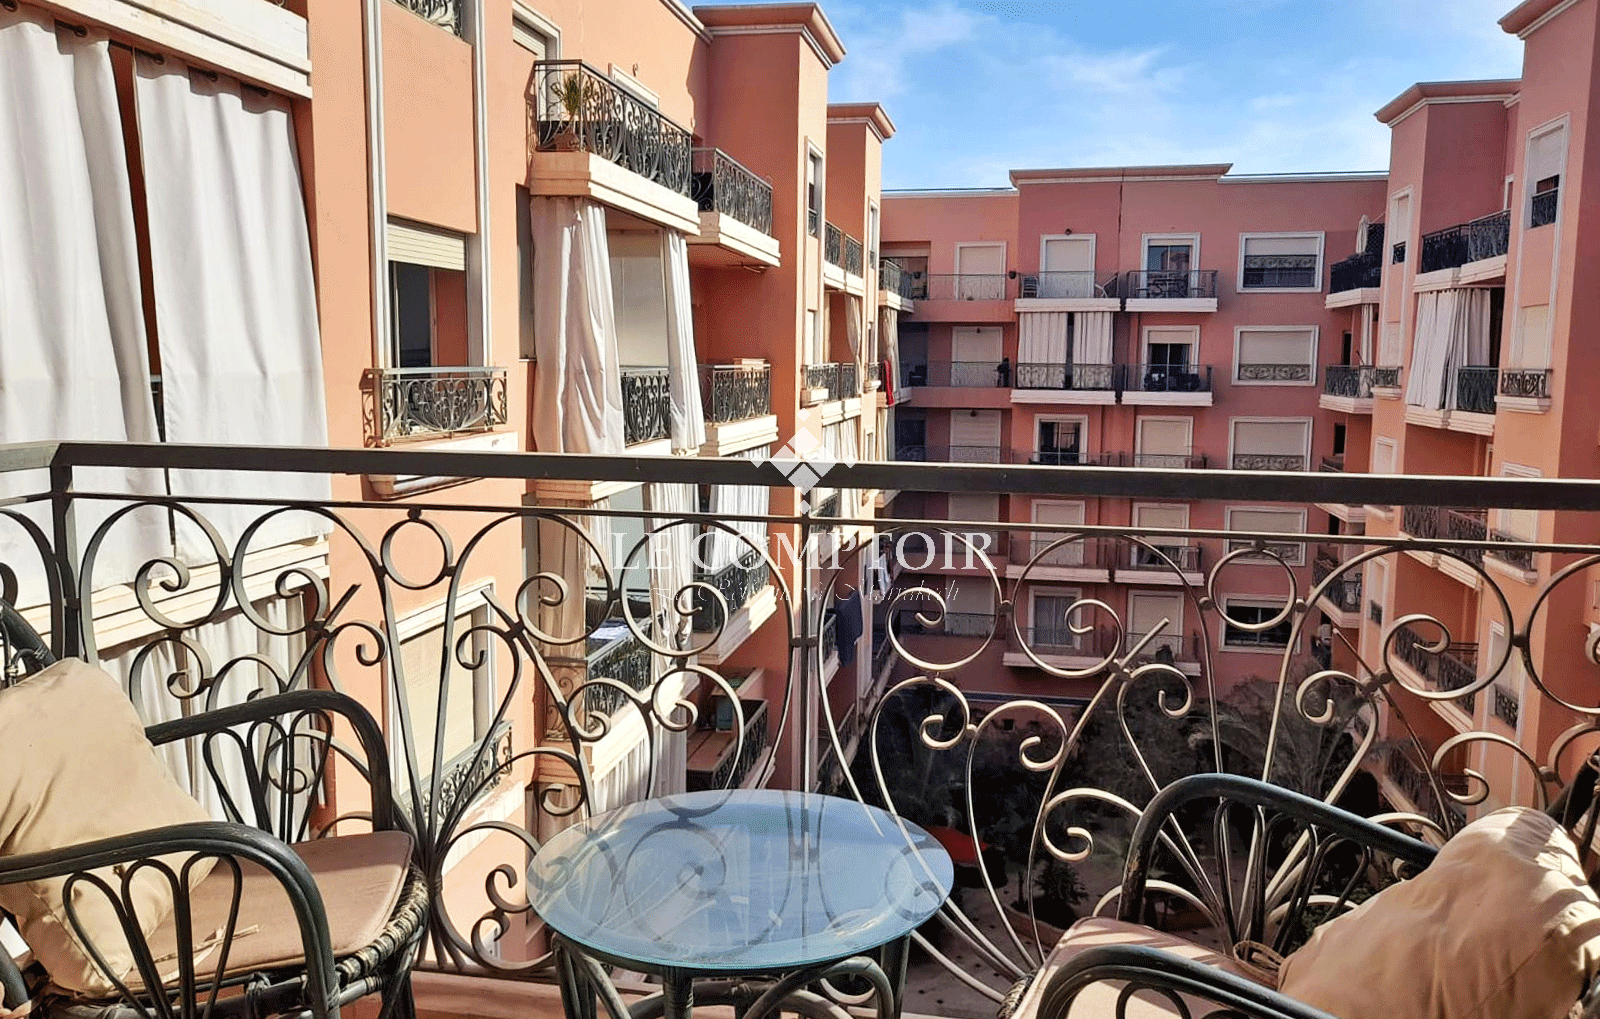 Le Comptoir Immobilier Agence Immobiliere Marrakech Location Appartement Semlalia Marrakech Piscine Terrasse 8 1